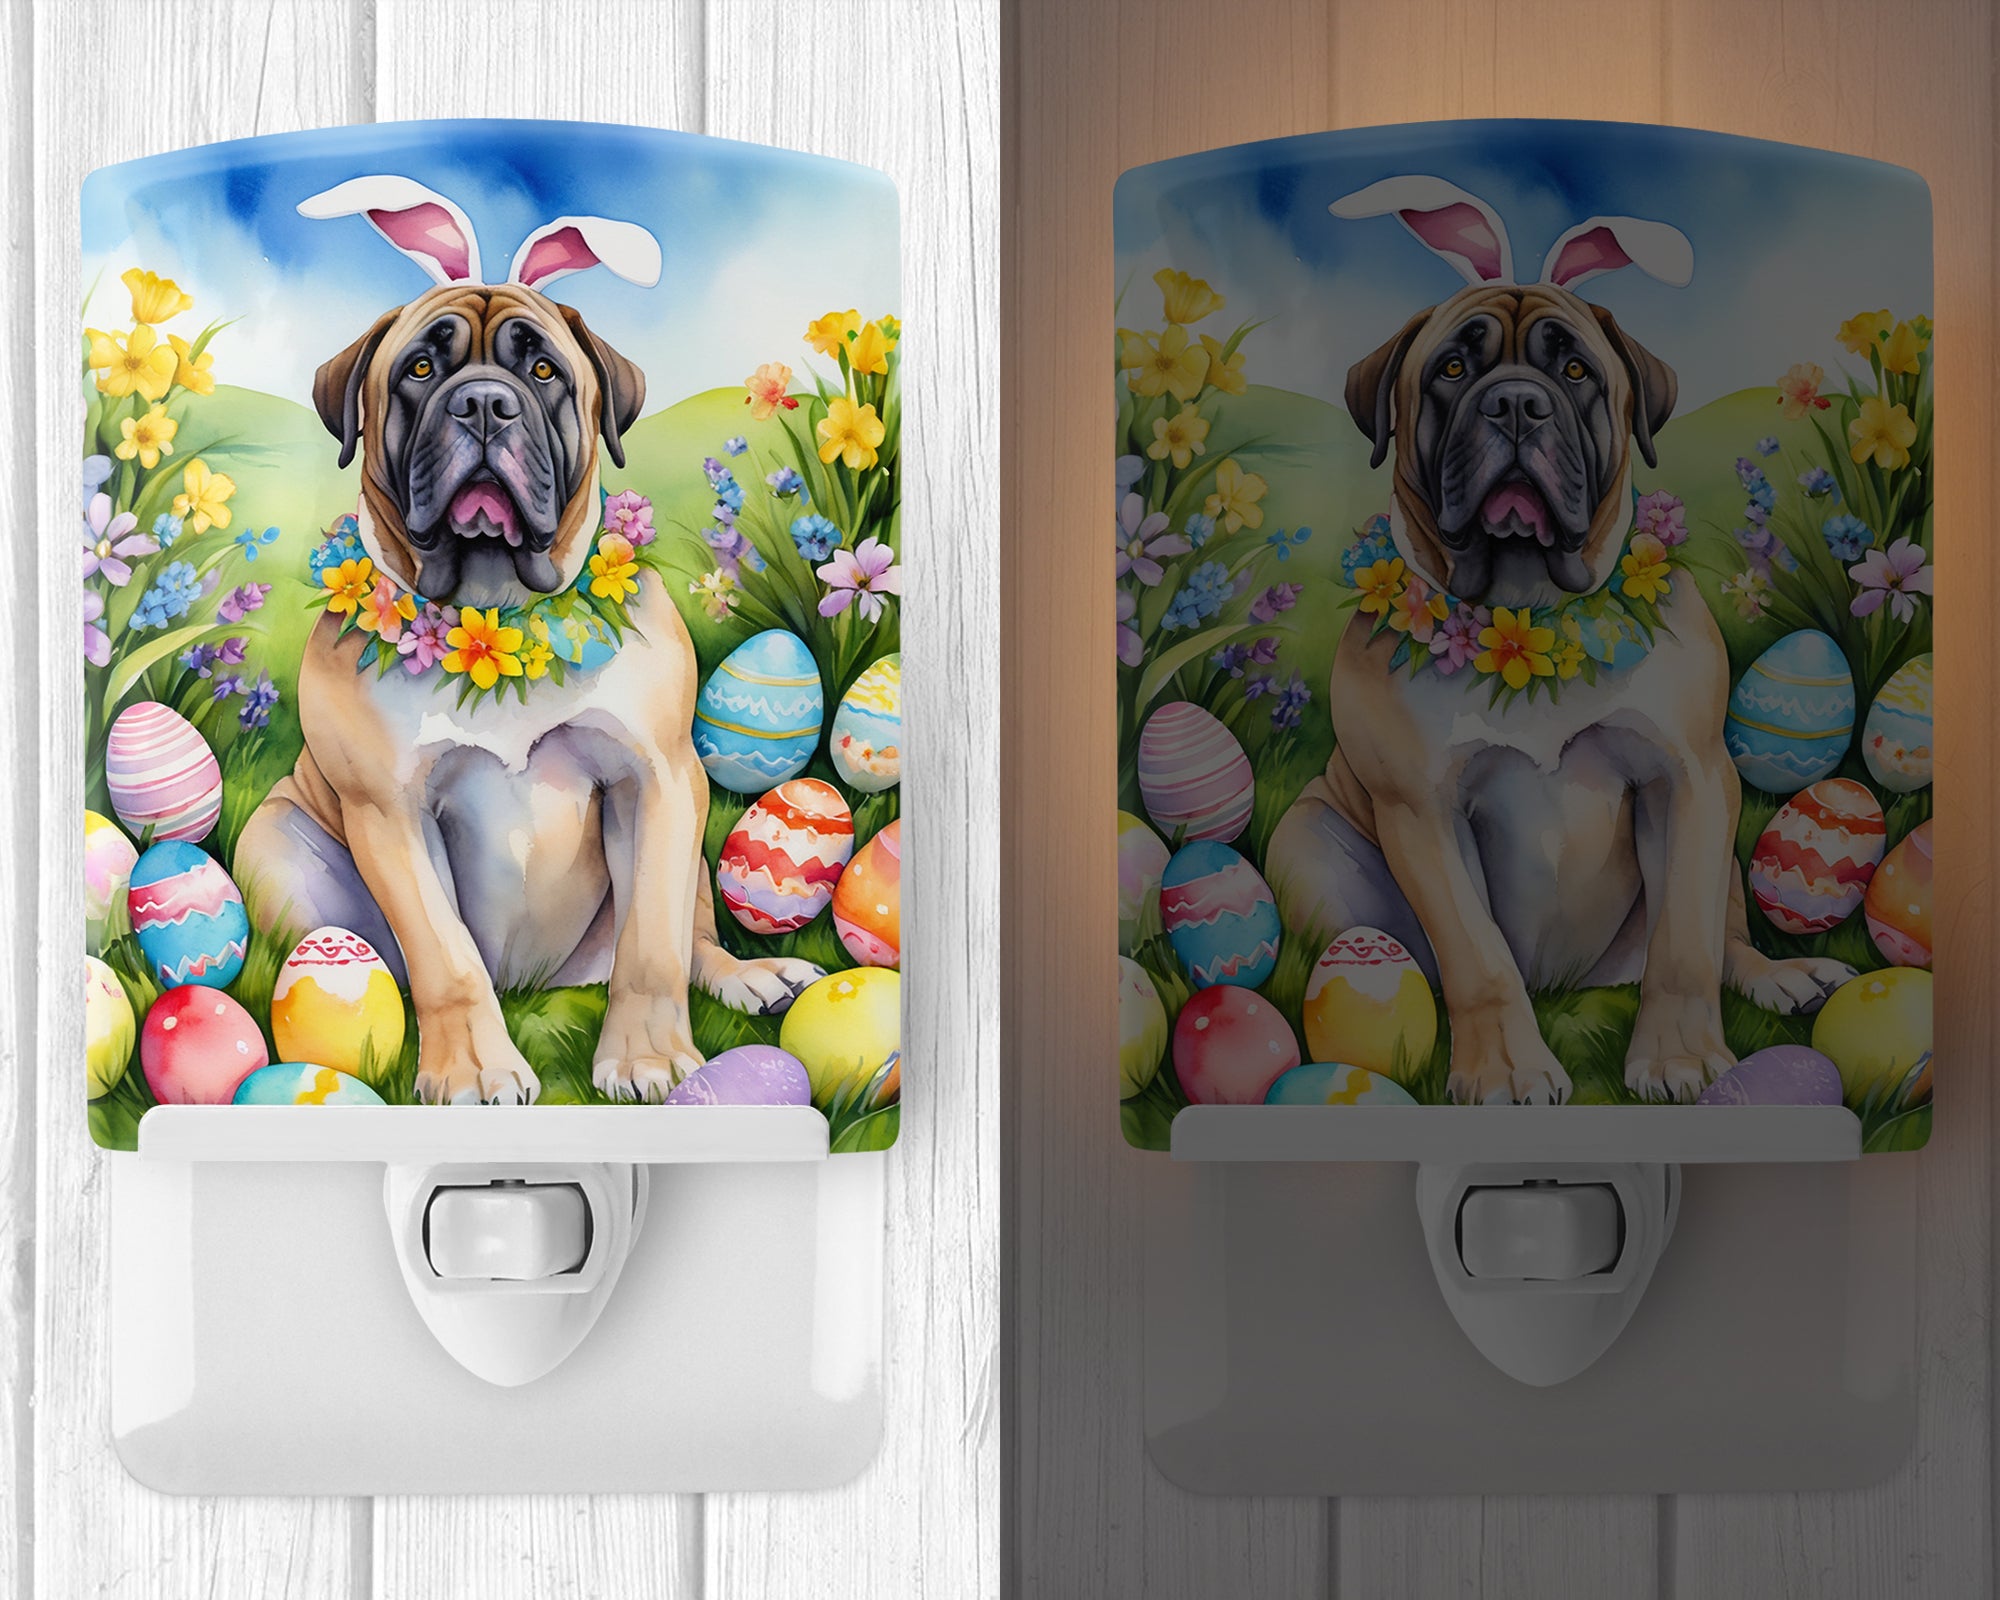 Buy this Mastiff Easter Egg Hunt Ceramic Night Light